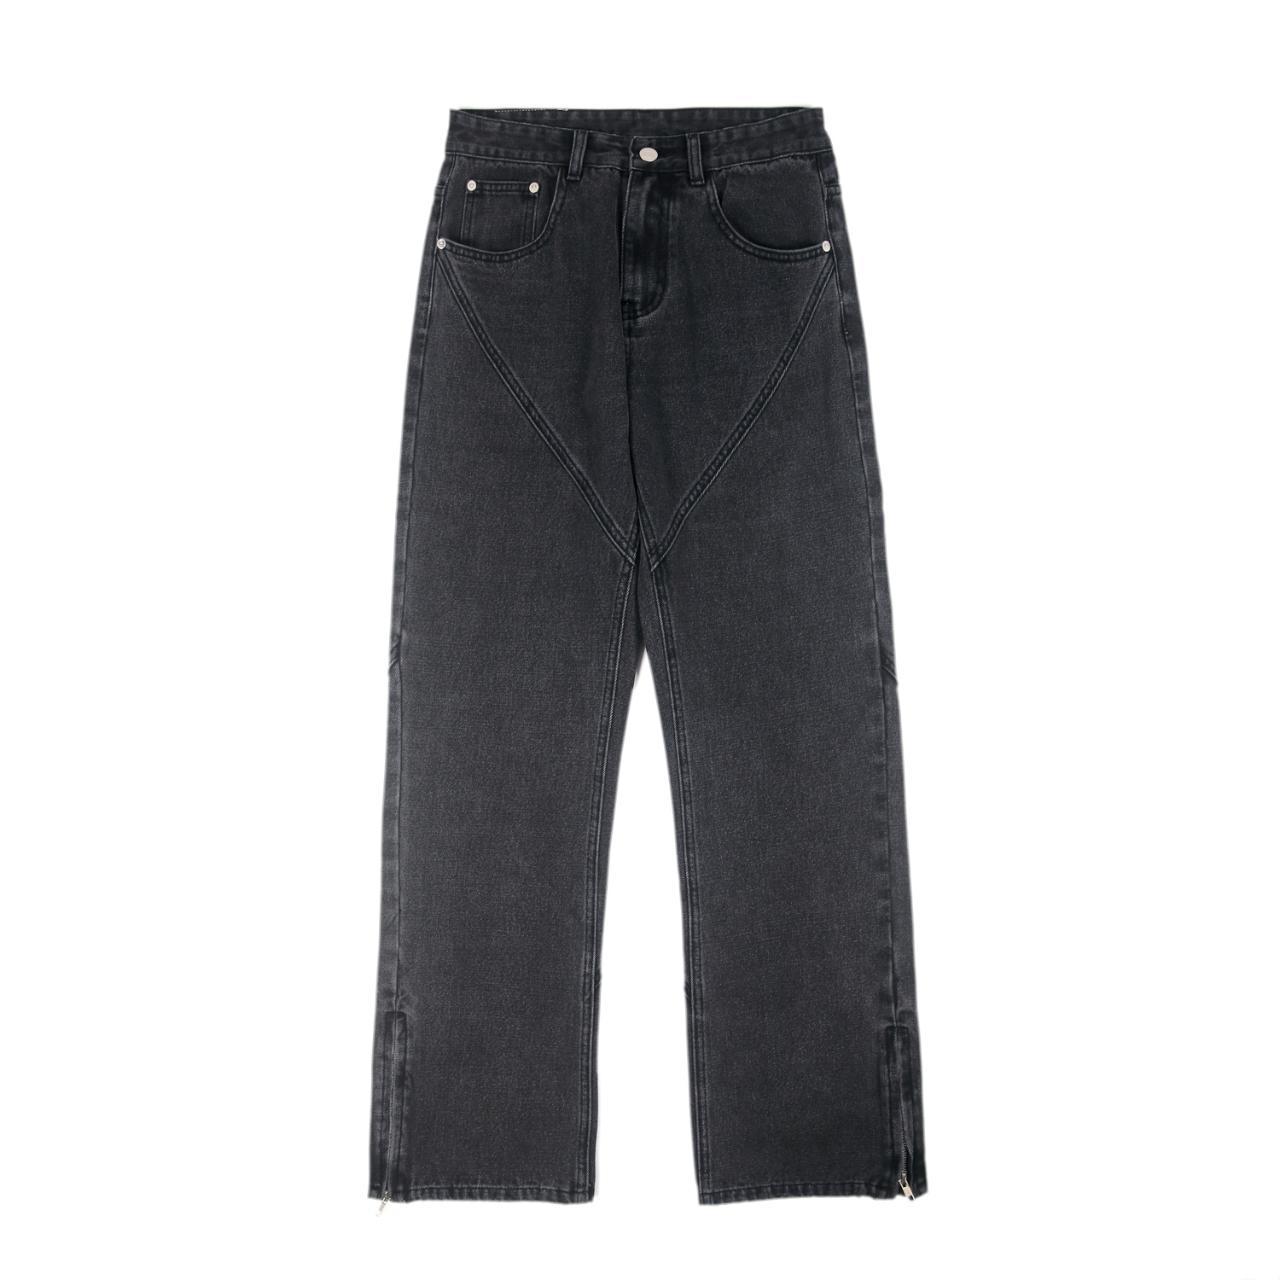 Mens black ankle zip jeans - fits more medium Open... - Depop